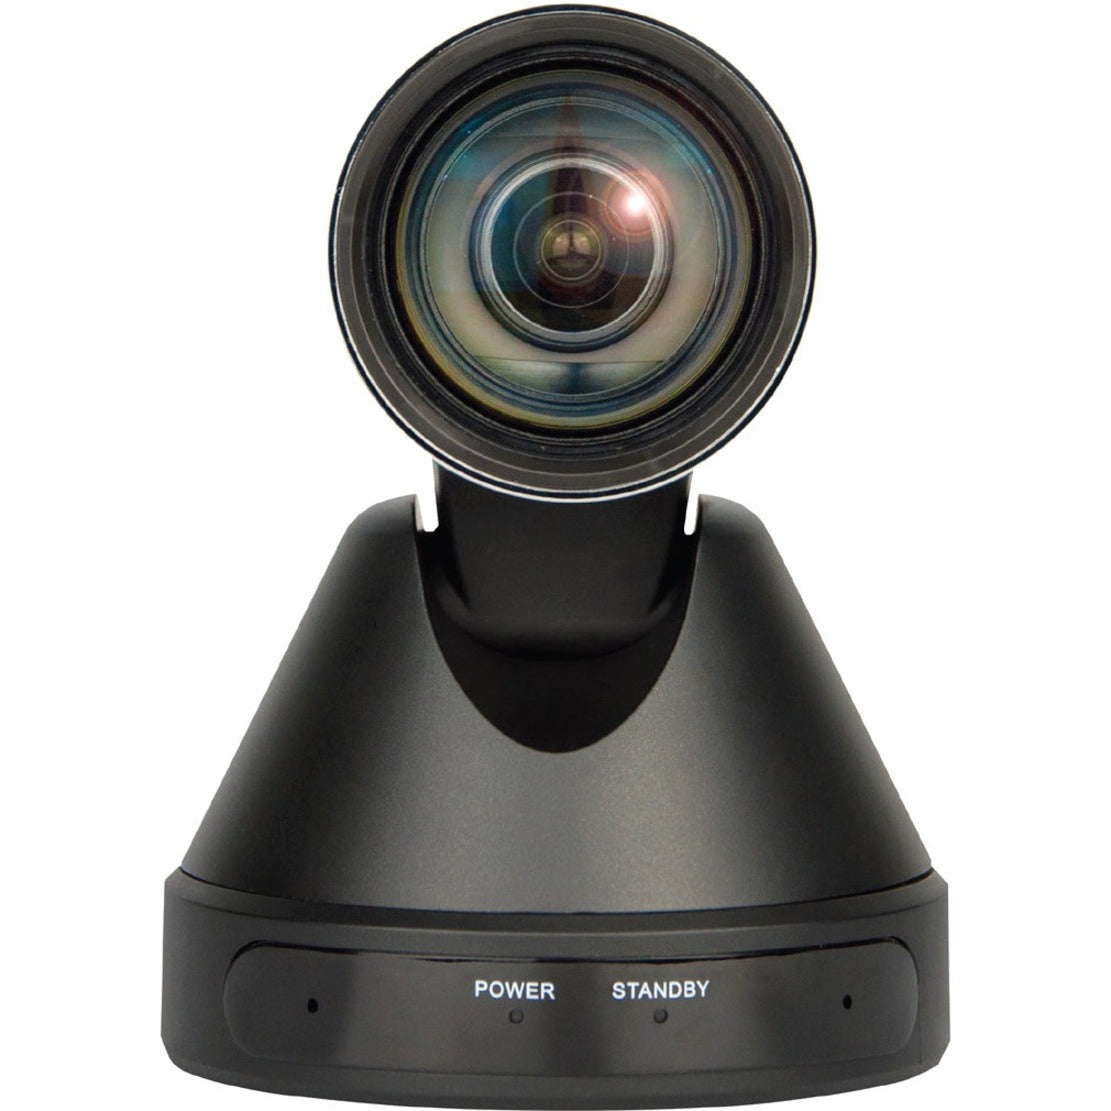 InFocus RealCam PTZ Camera - USB 3.0, 32x Digital Zoom [Discontinued]